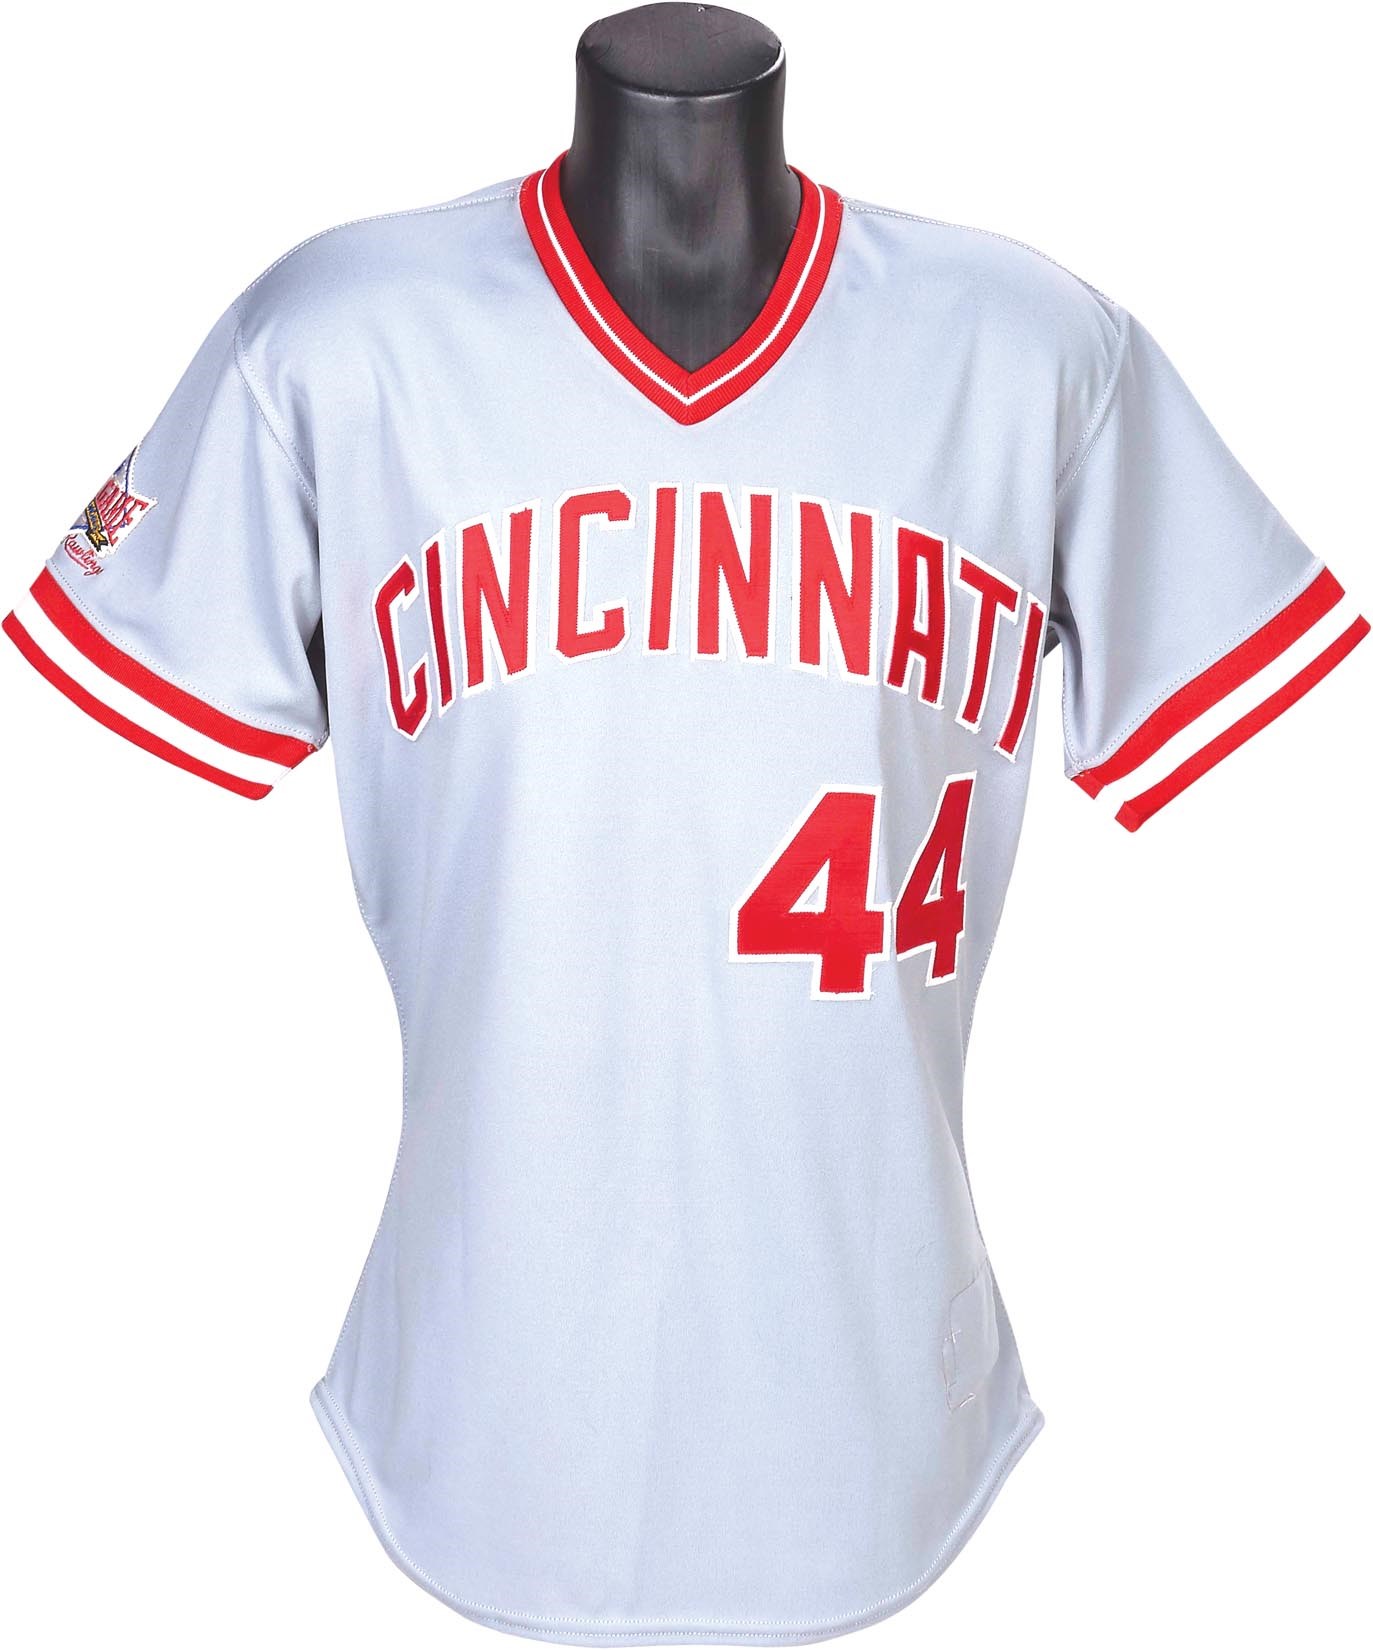 - 1989 Eric Davis Cincinnati Reds All-Star Game Worn Uniform